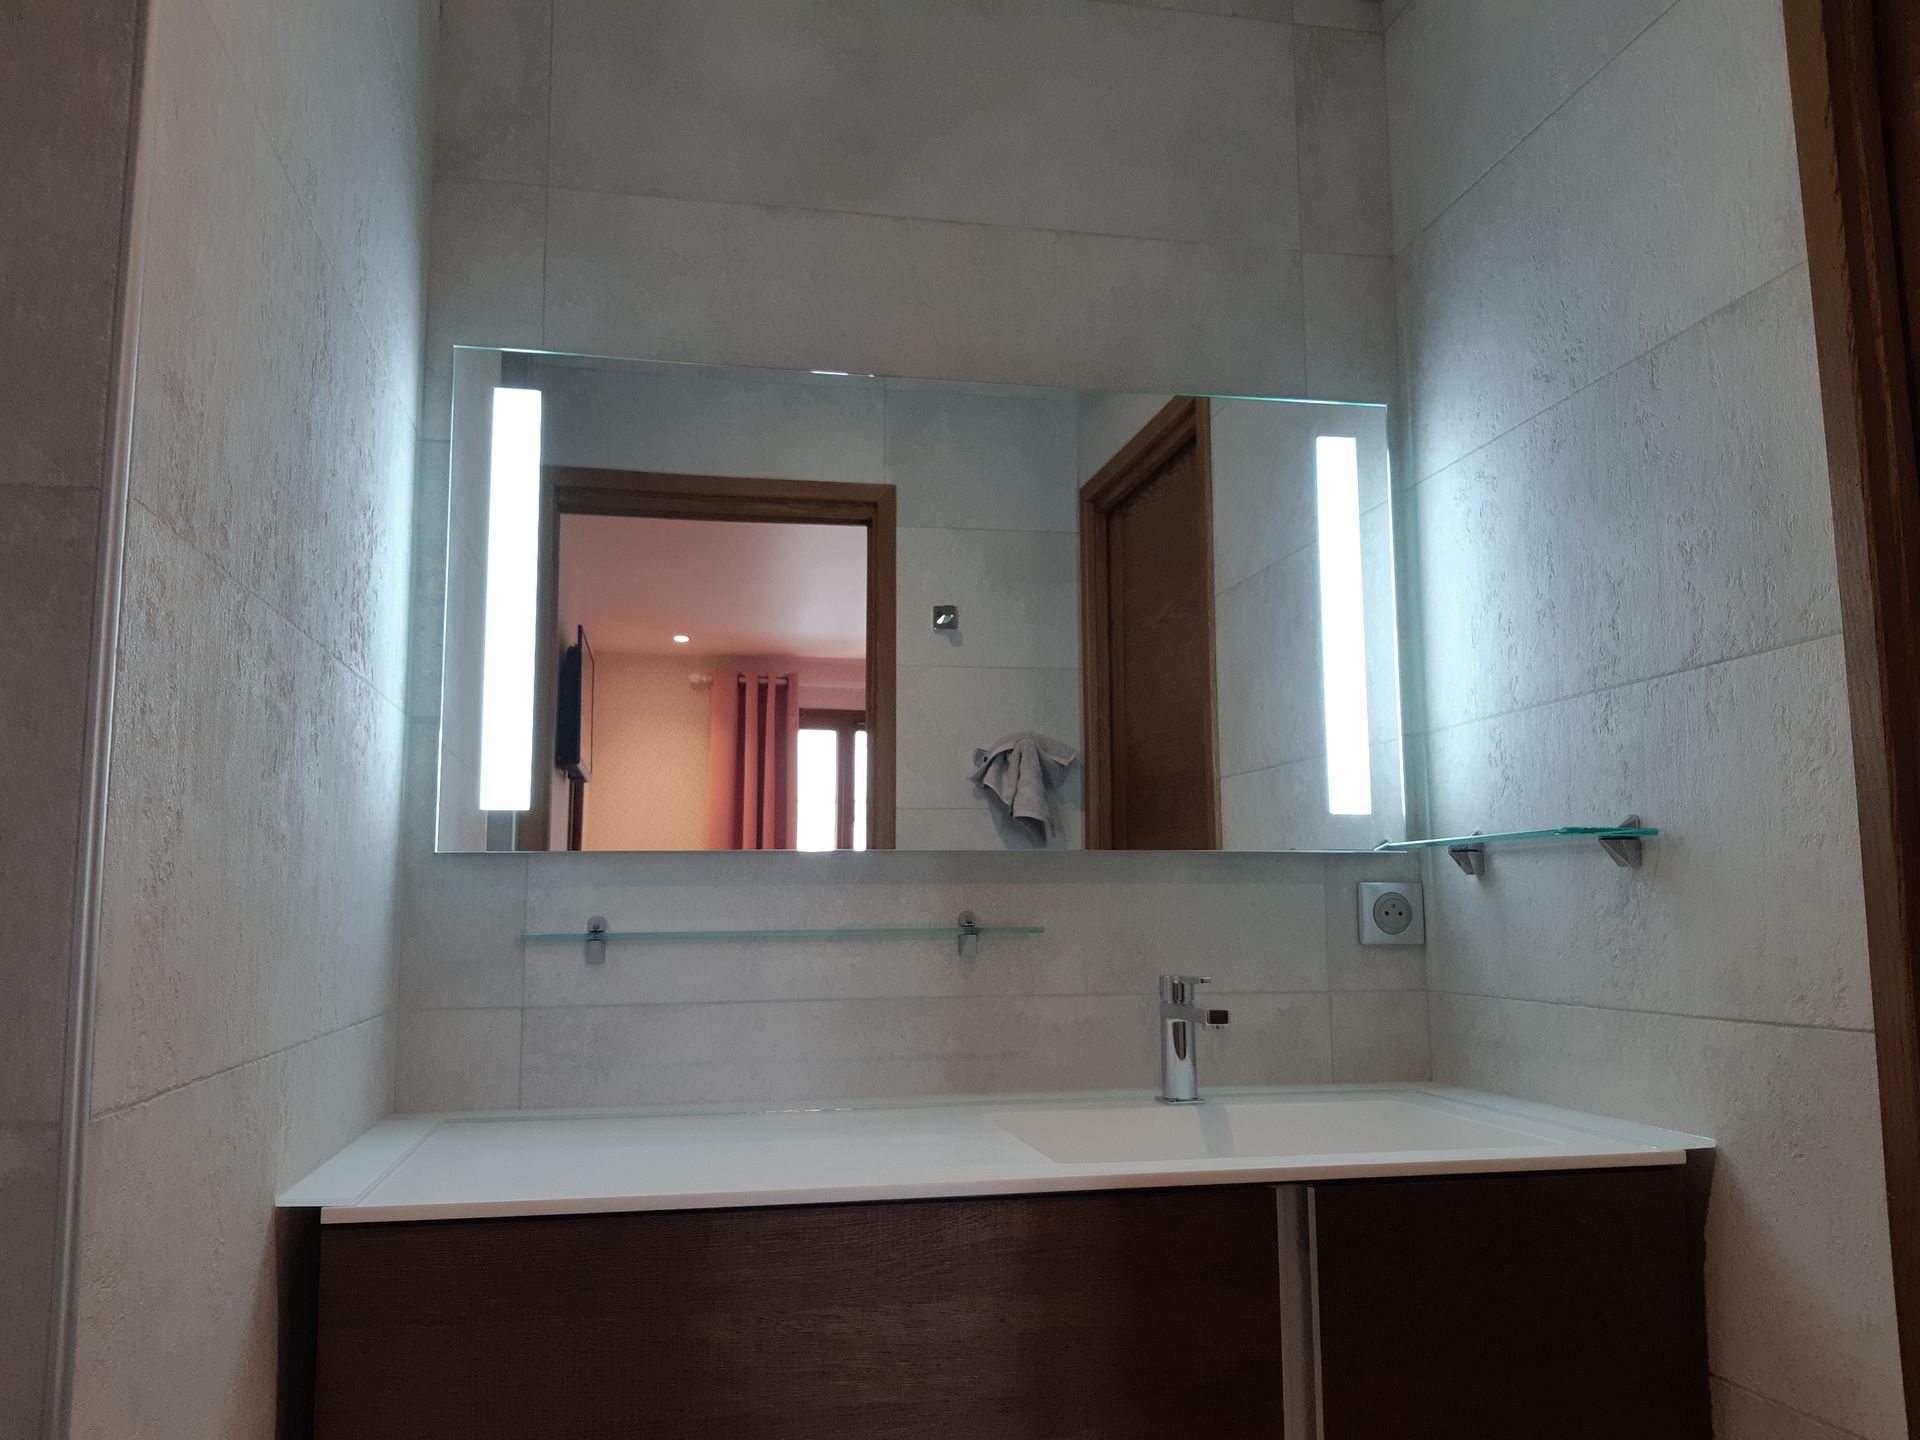 Salle de bains avec miroir à fond lumineux